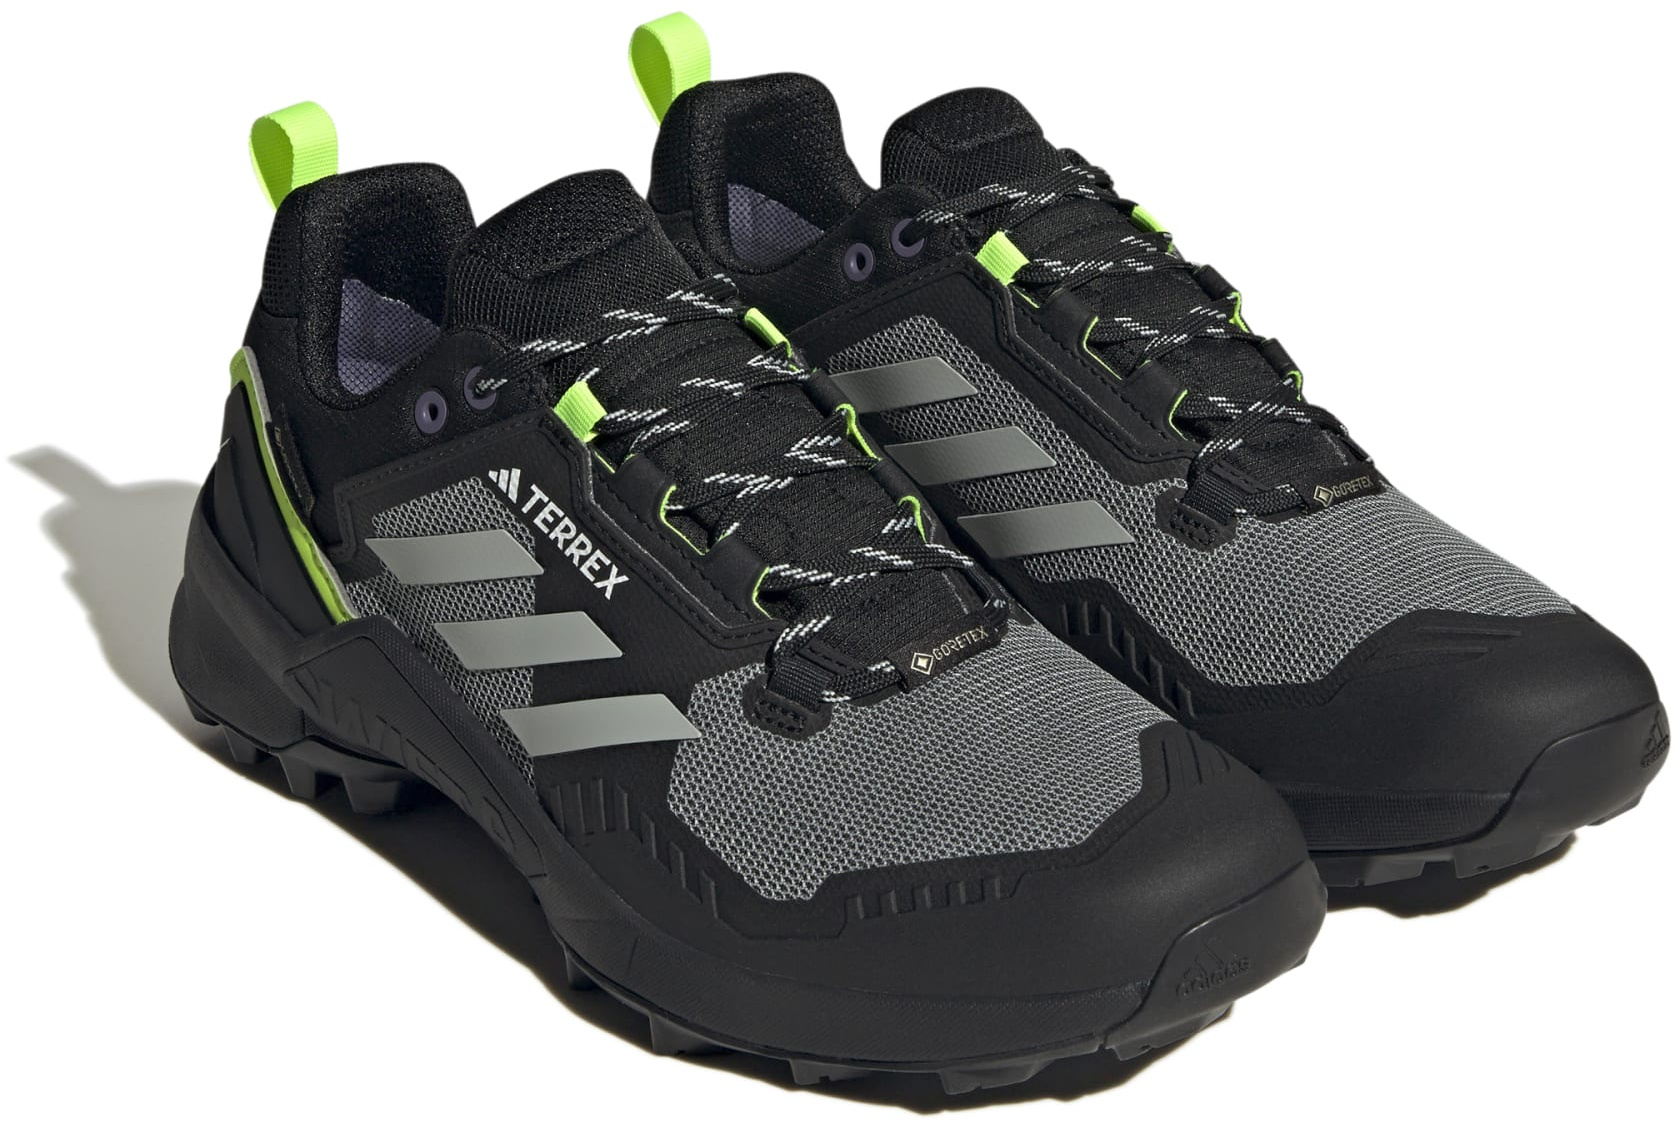 Ботинки для походов Adidas Terrex Swift R3 GORE-TEX® для мужчин Adidas